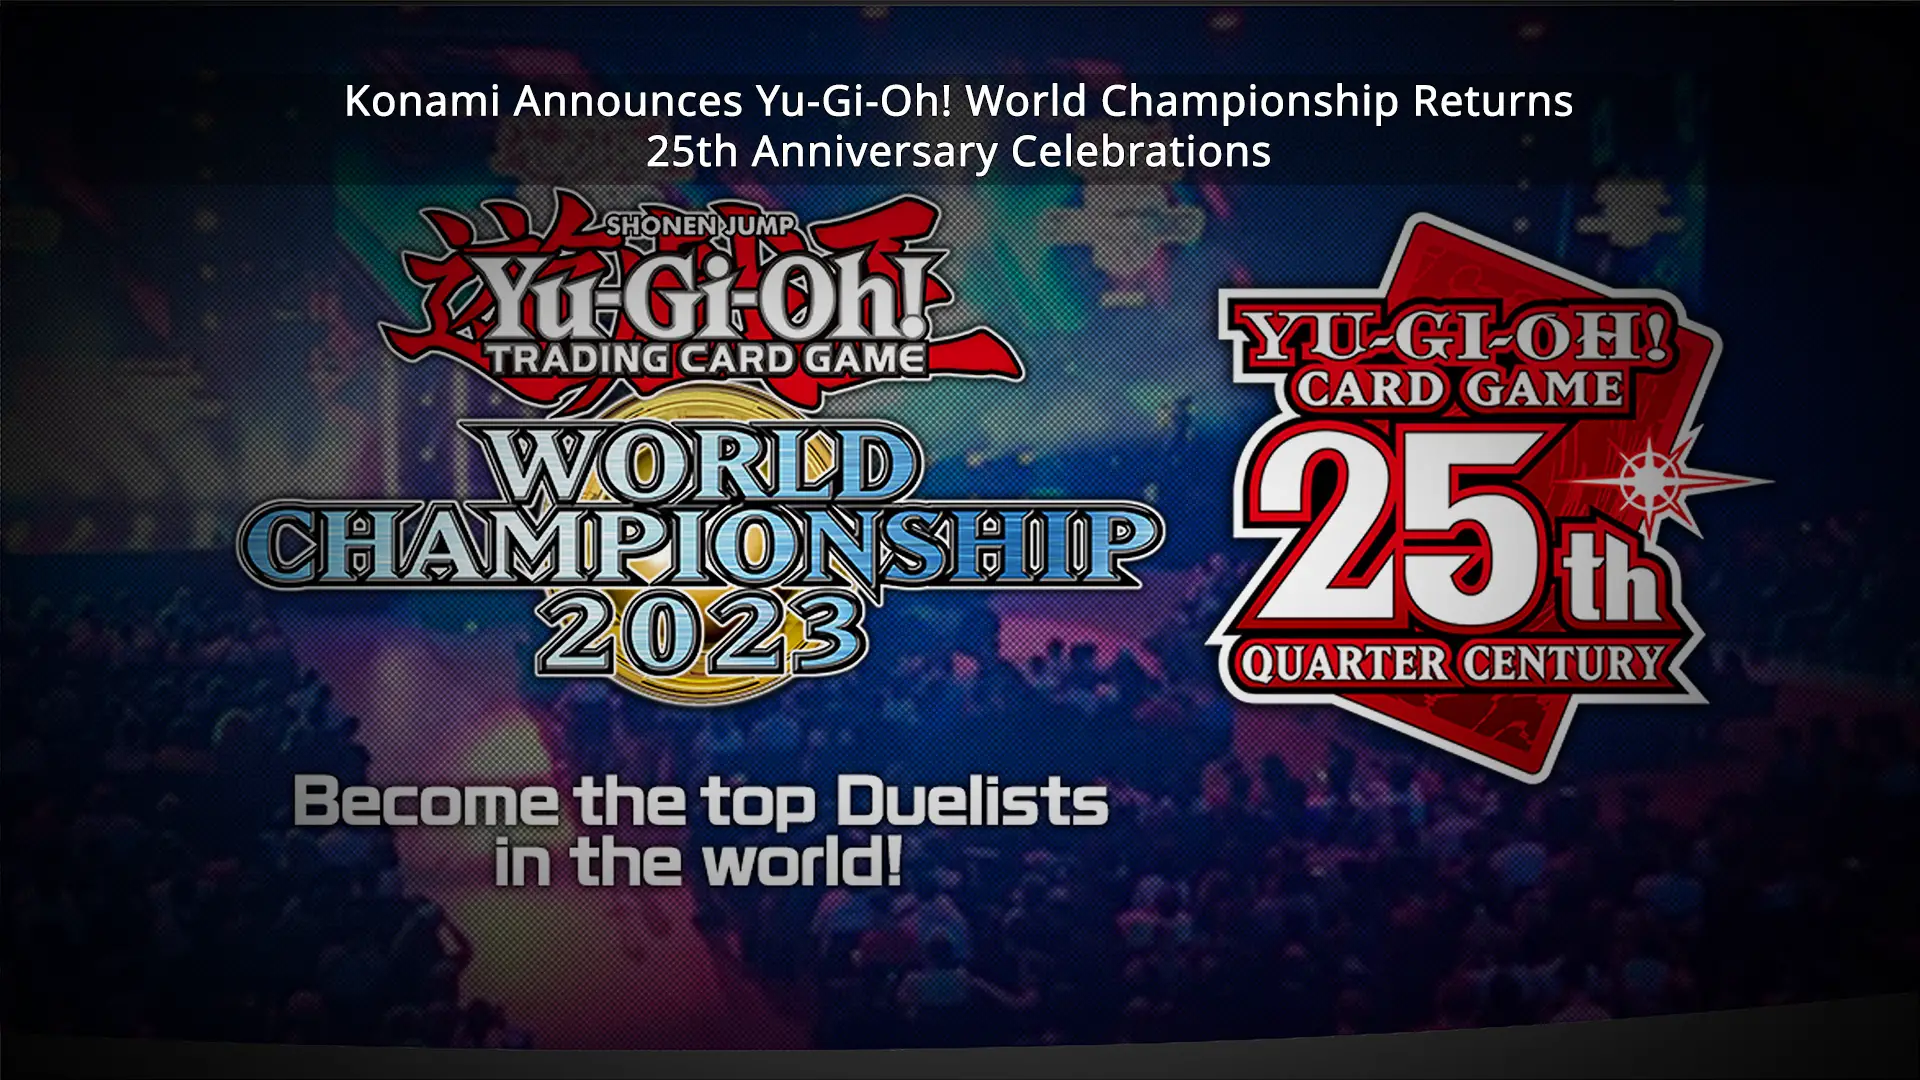 Konami Announces Yu-Gi-Oh! World Championship Returns/25th